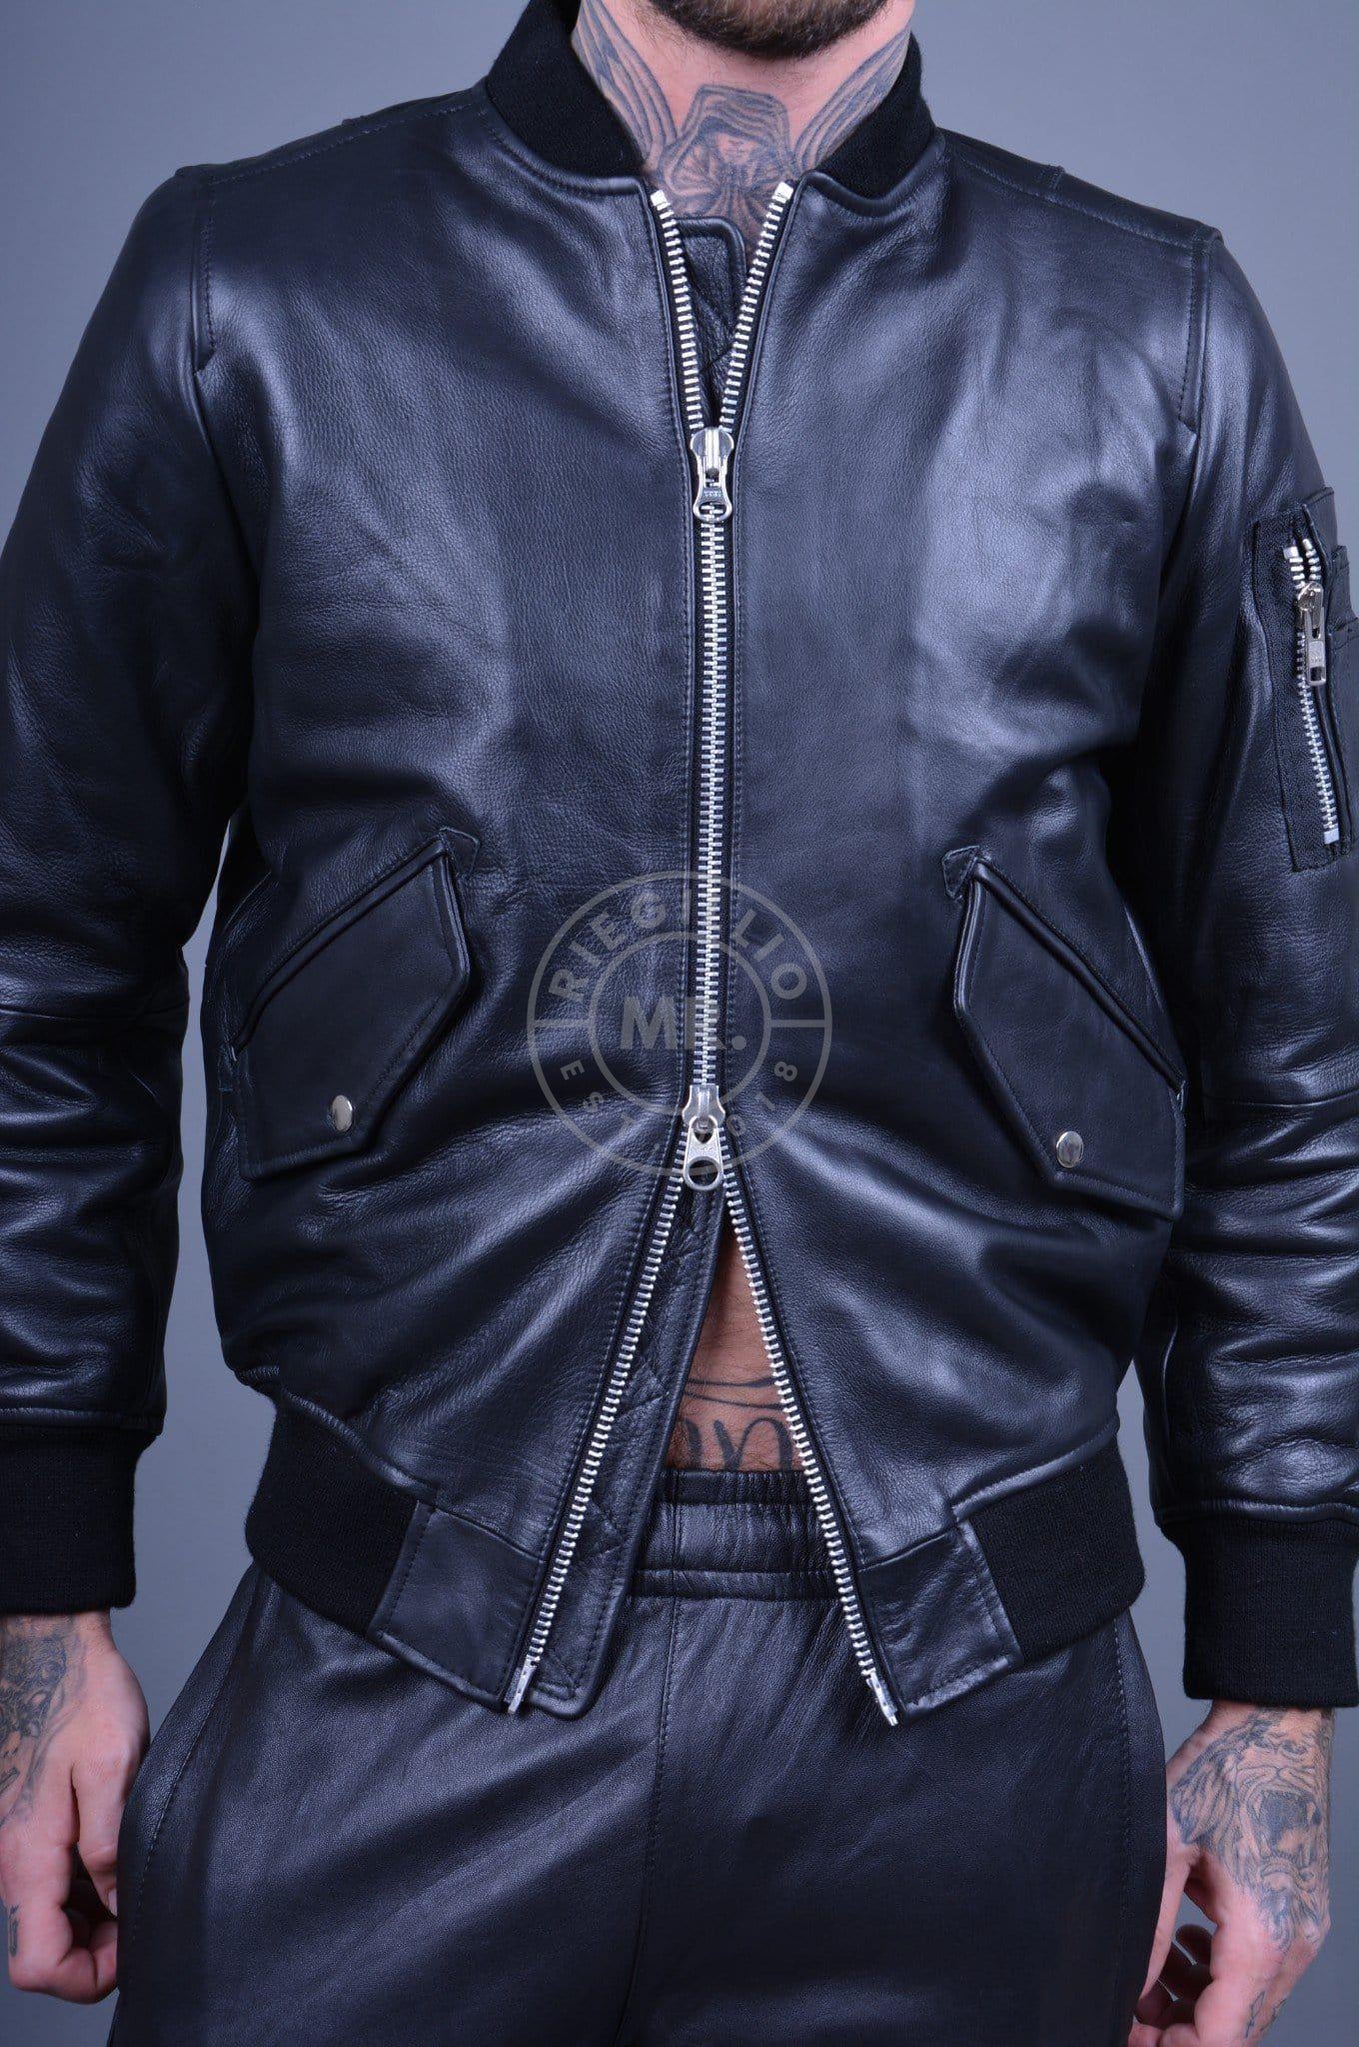 Black Leather Bomber Jacket at MR. Riegillio